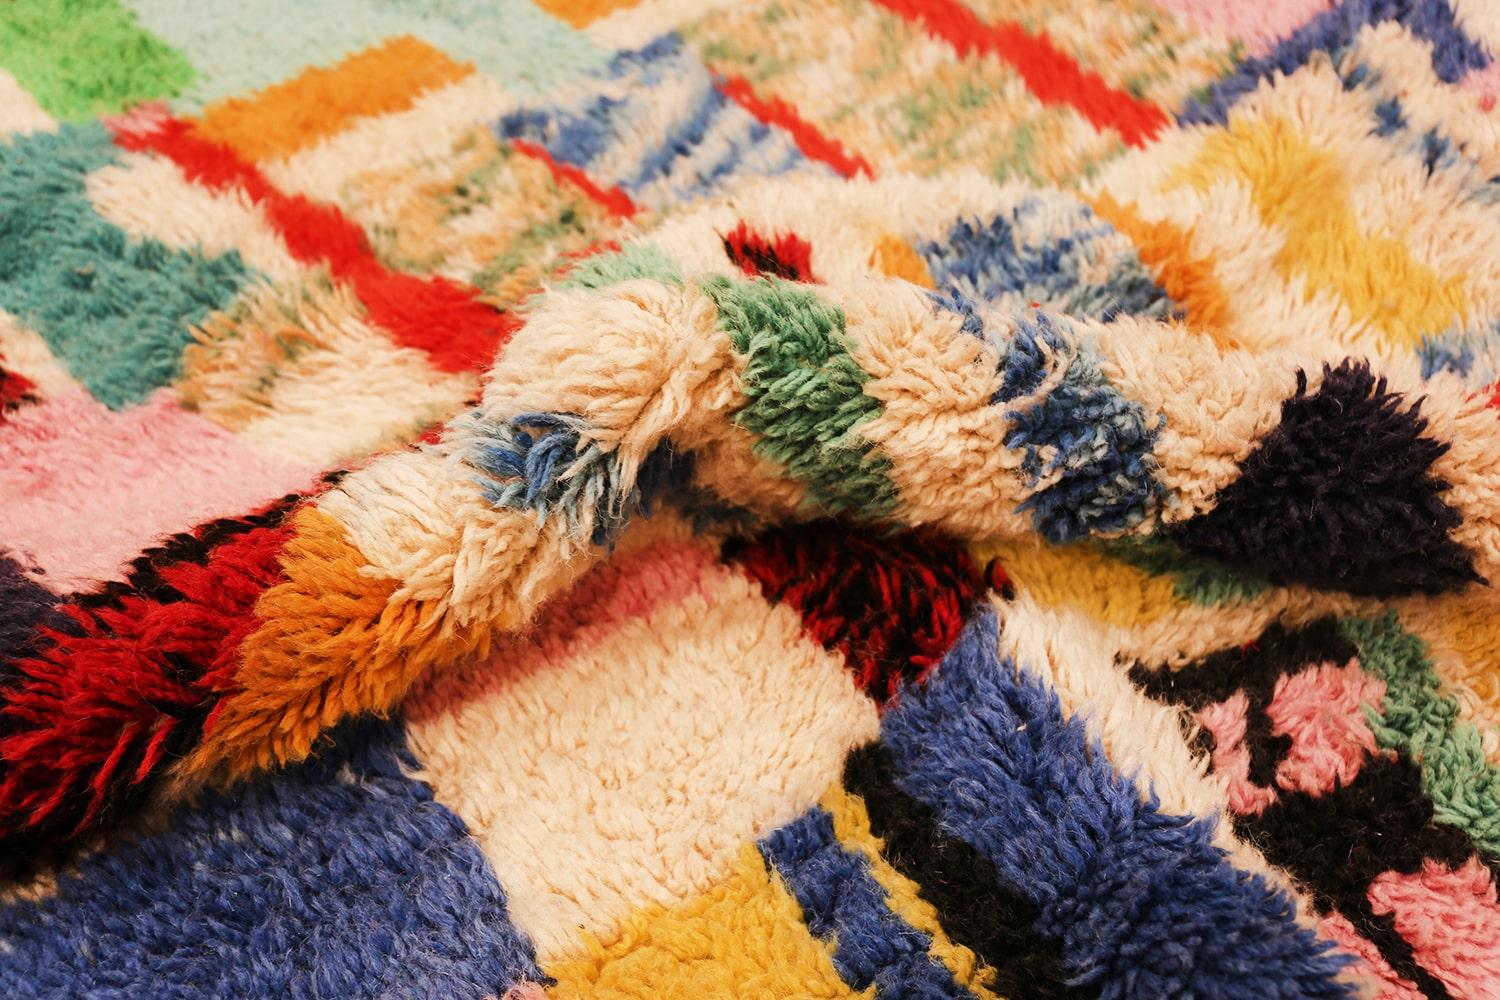 Wool Vintage Swedish Rya Shag Rug. Size: 5 ft x 6 ft 4 in (1.52 m x 1.93 m)